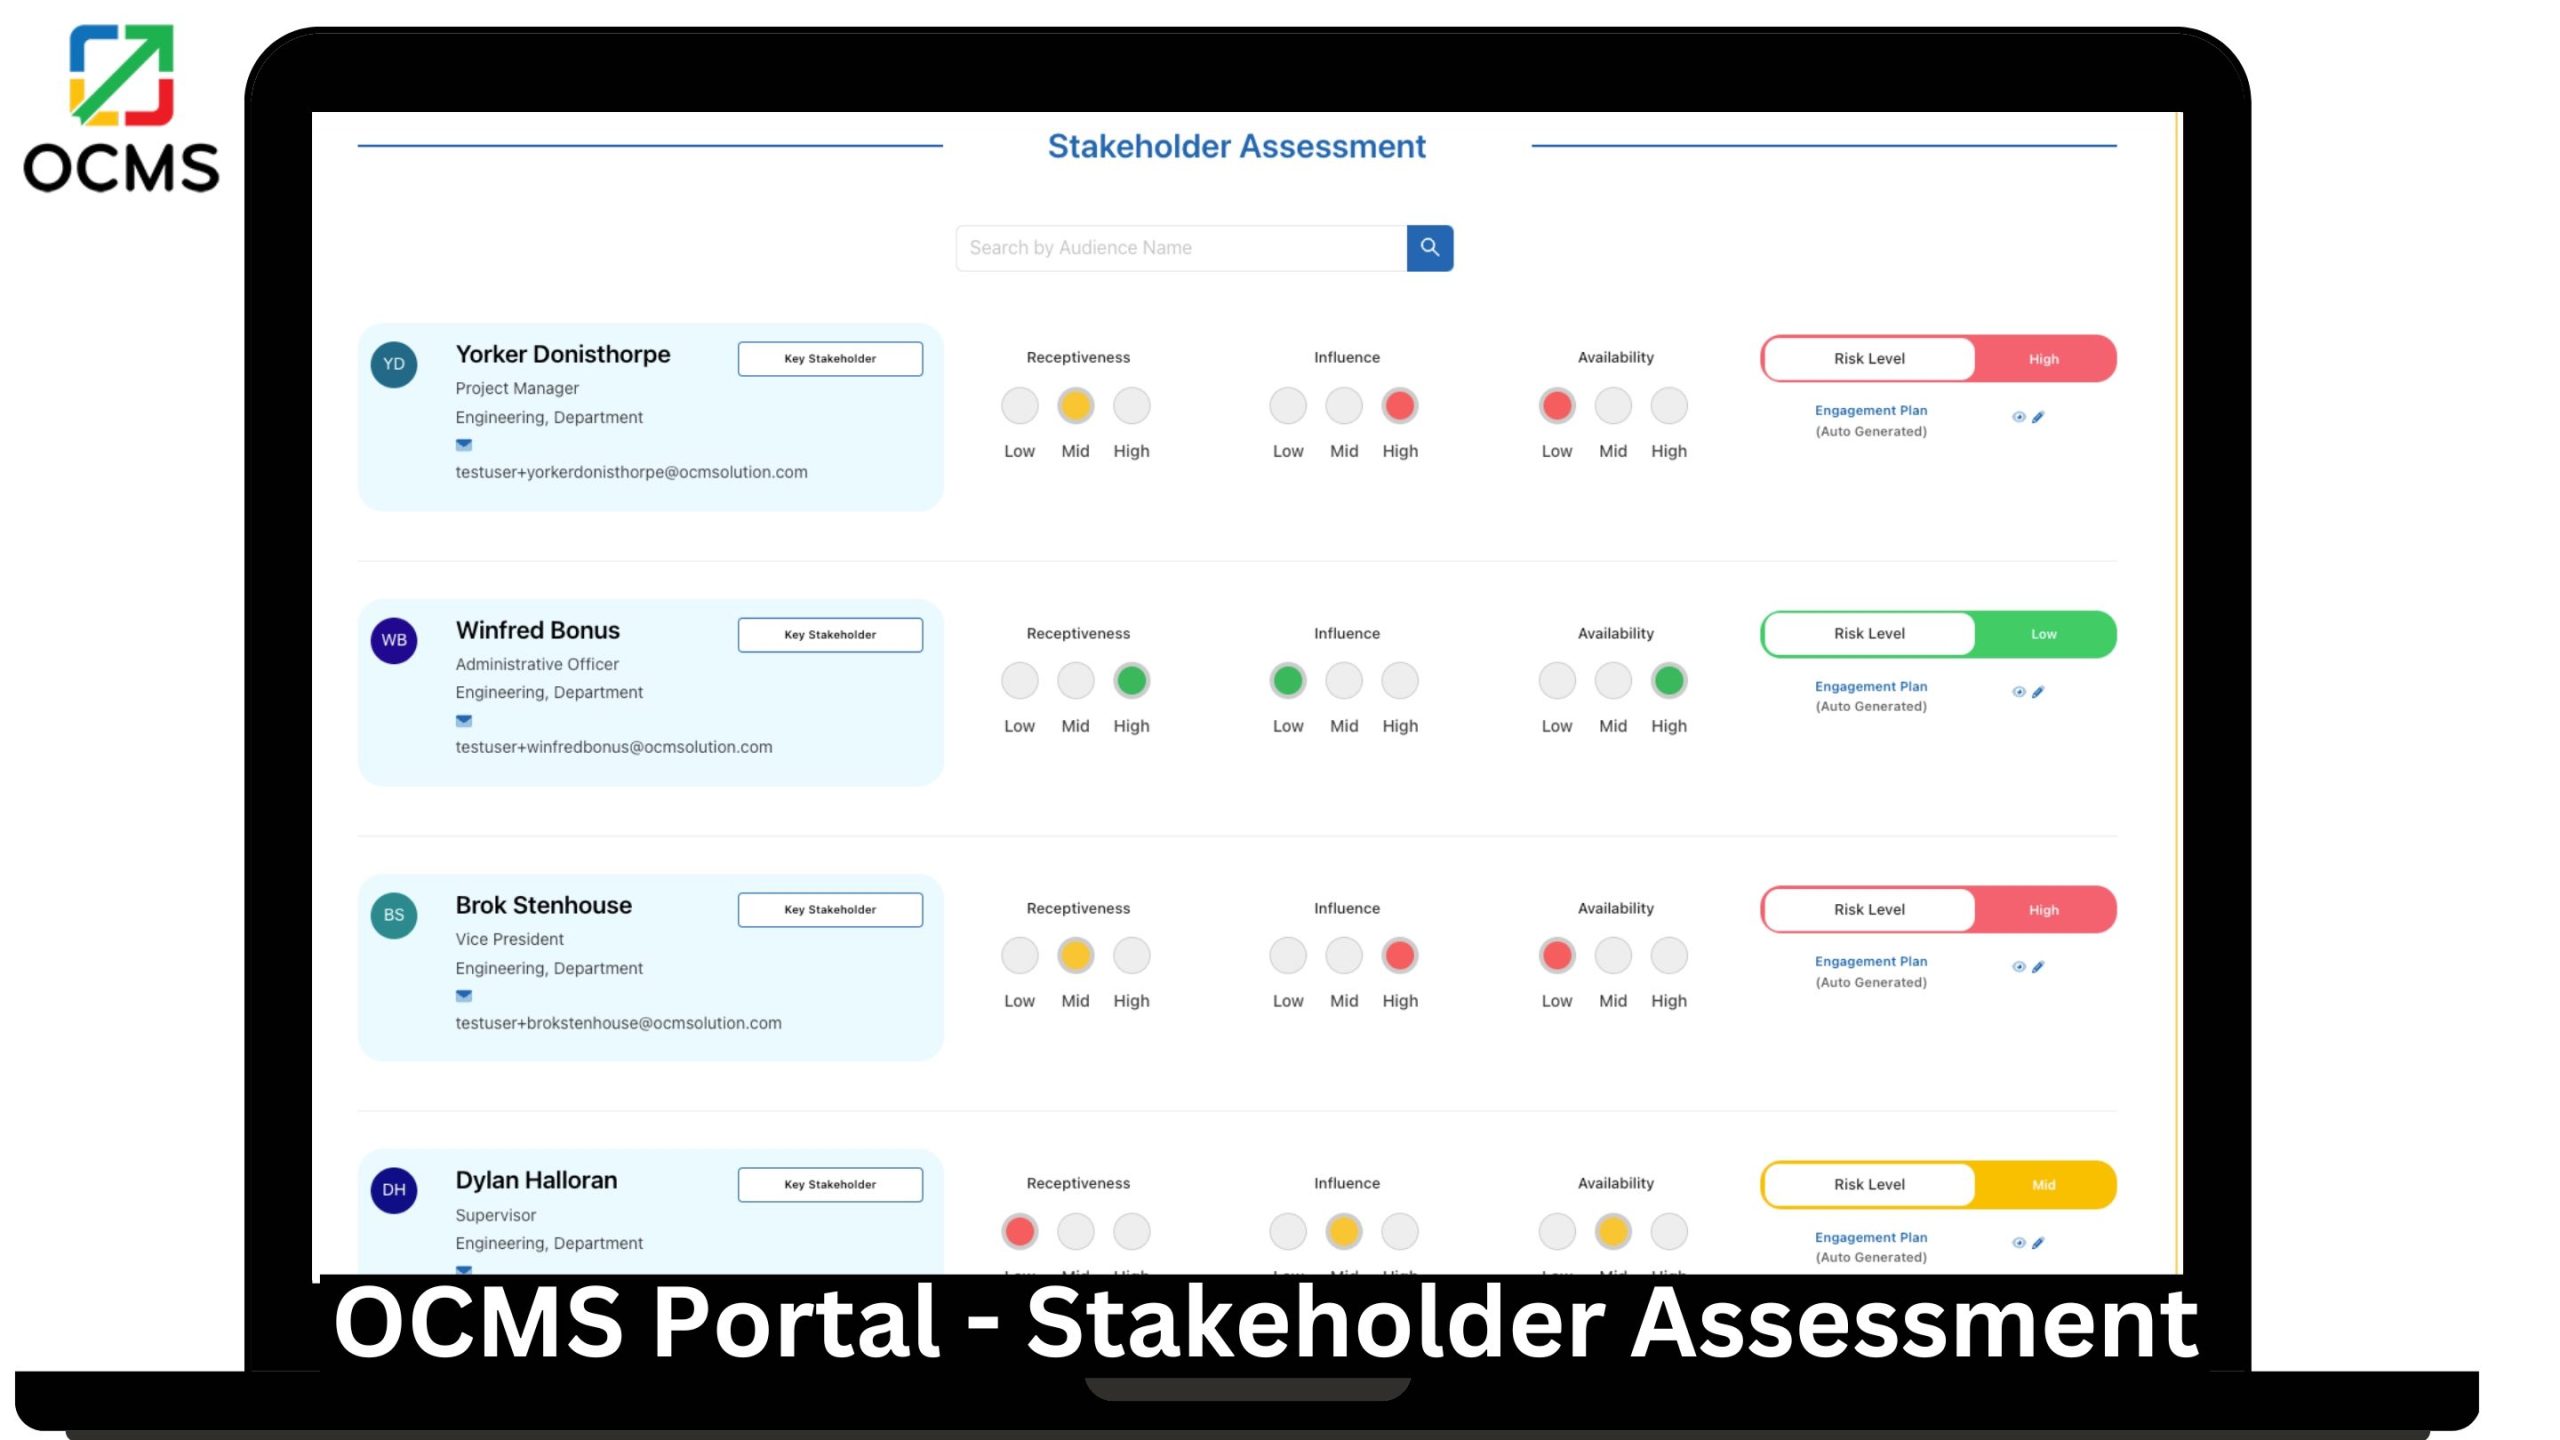 stakeholder assessment and management tool ocms portal